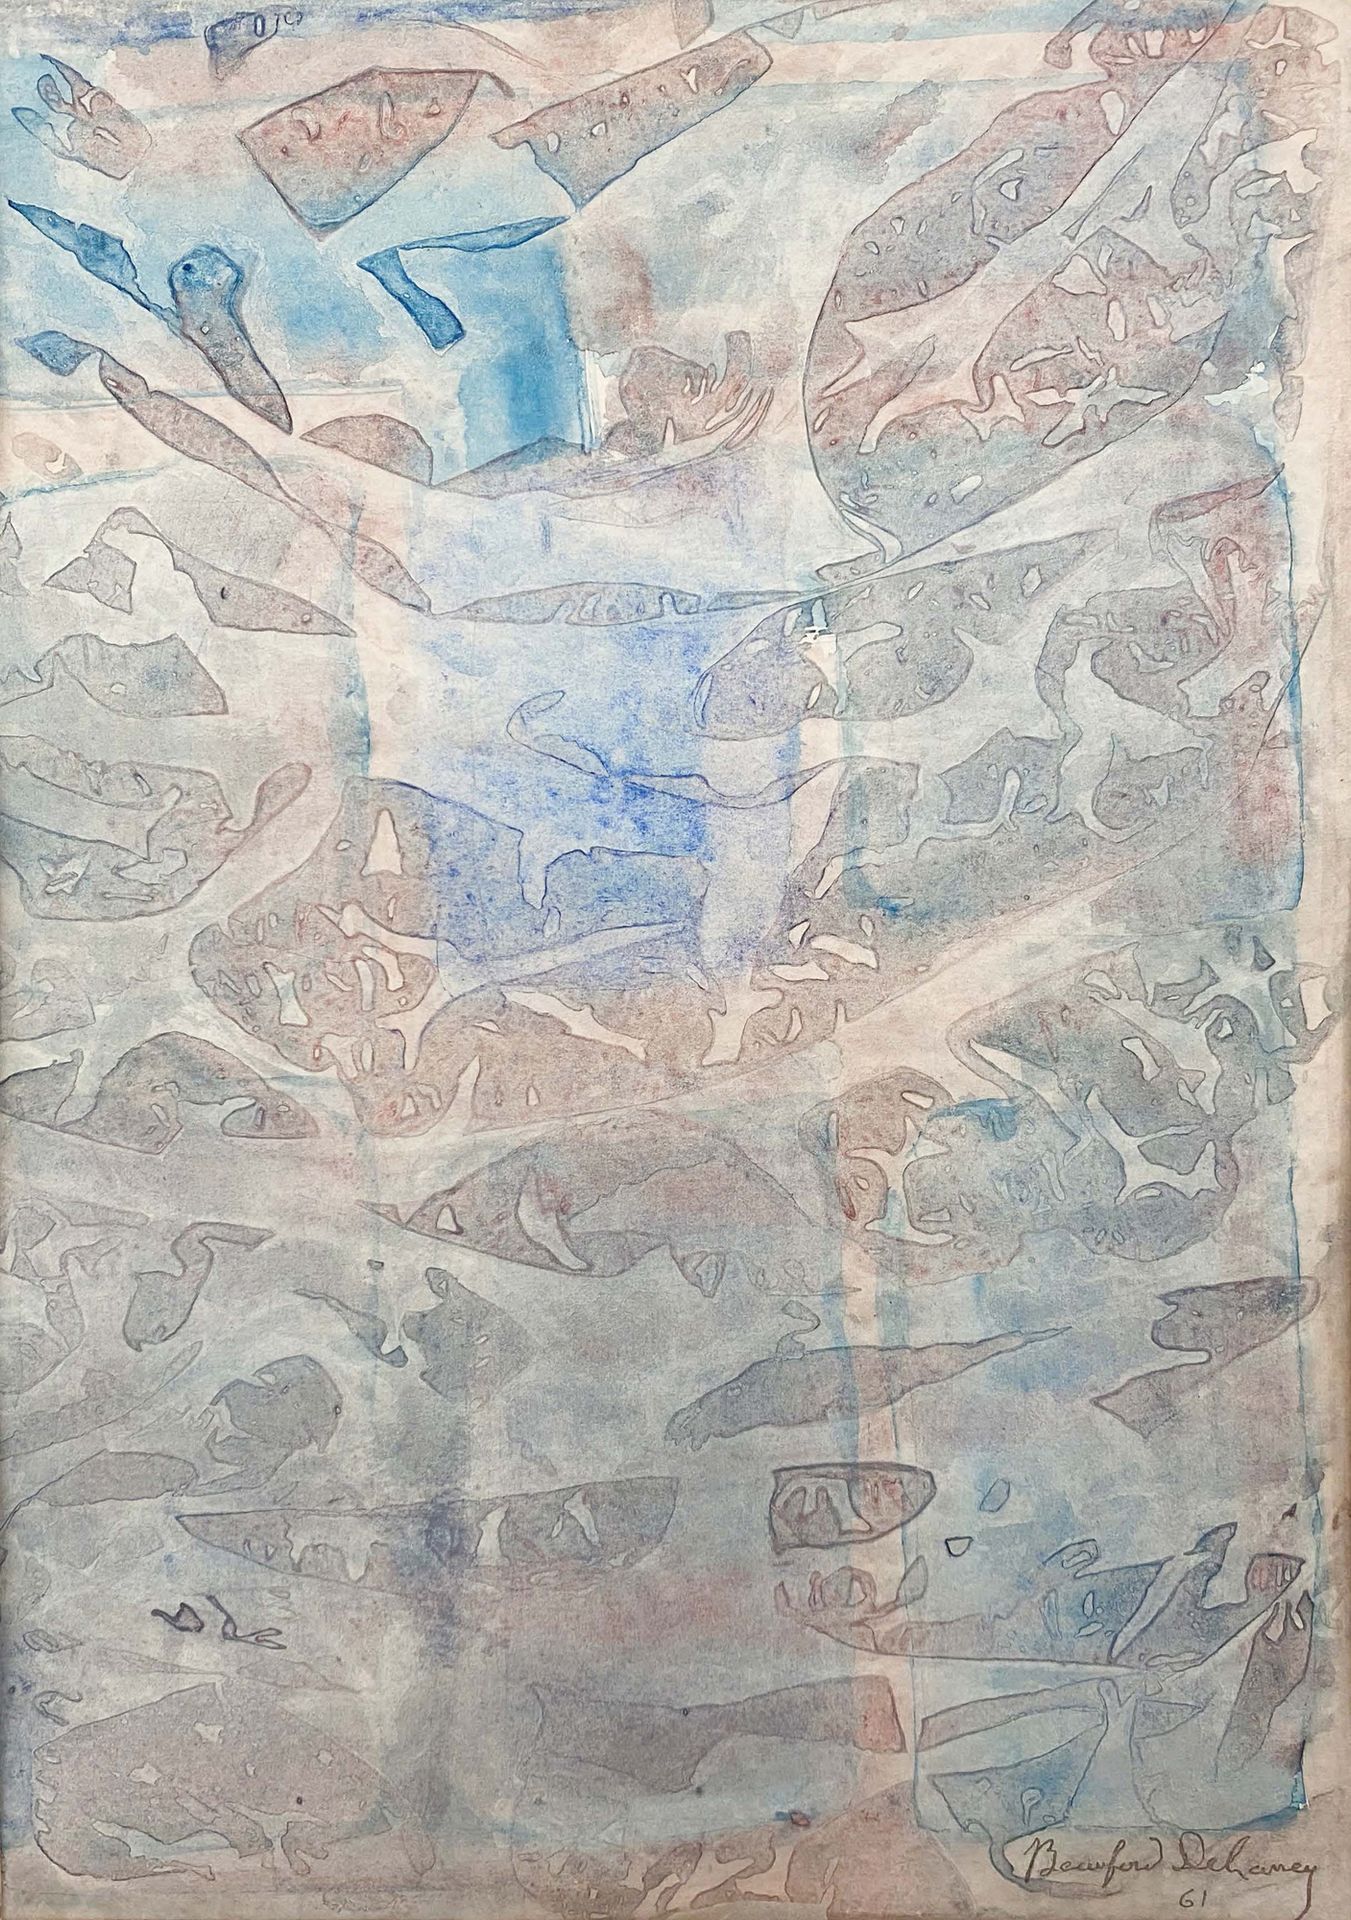 Beauford DELANEY (1901-1979) 构图，1961年
纸上水彩画。
右下方有签名和日期。
背面有一幅红色铅笔画和一个献词："Pour Ro&hellip;